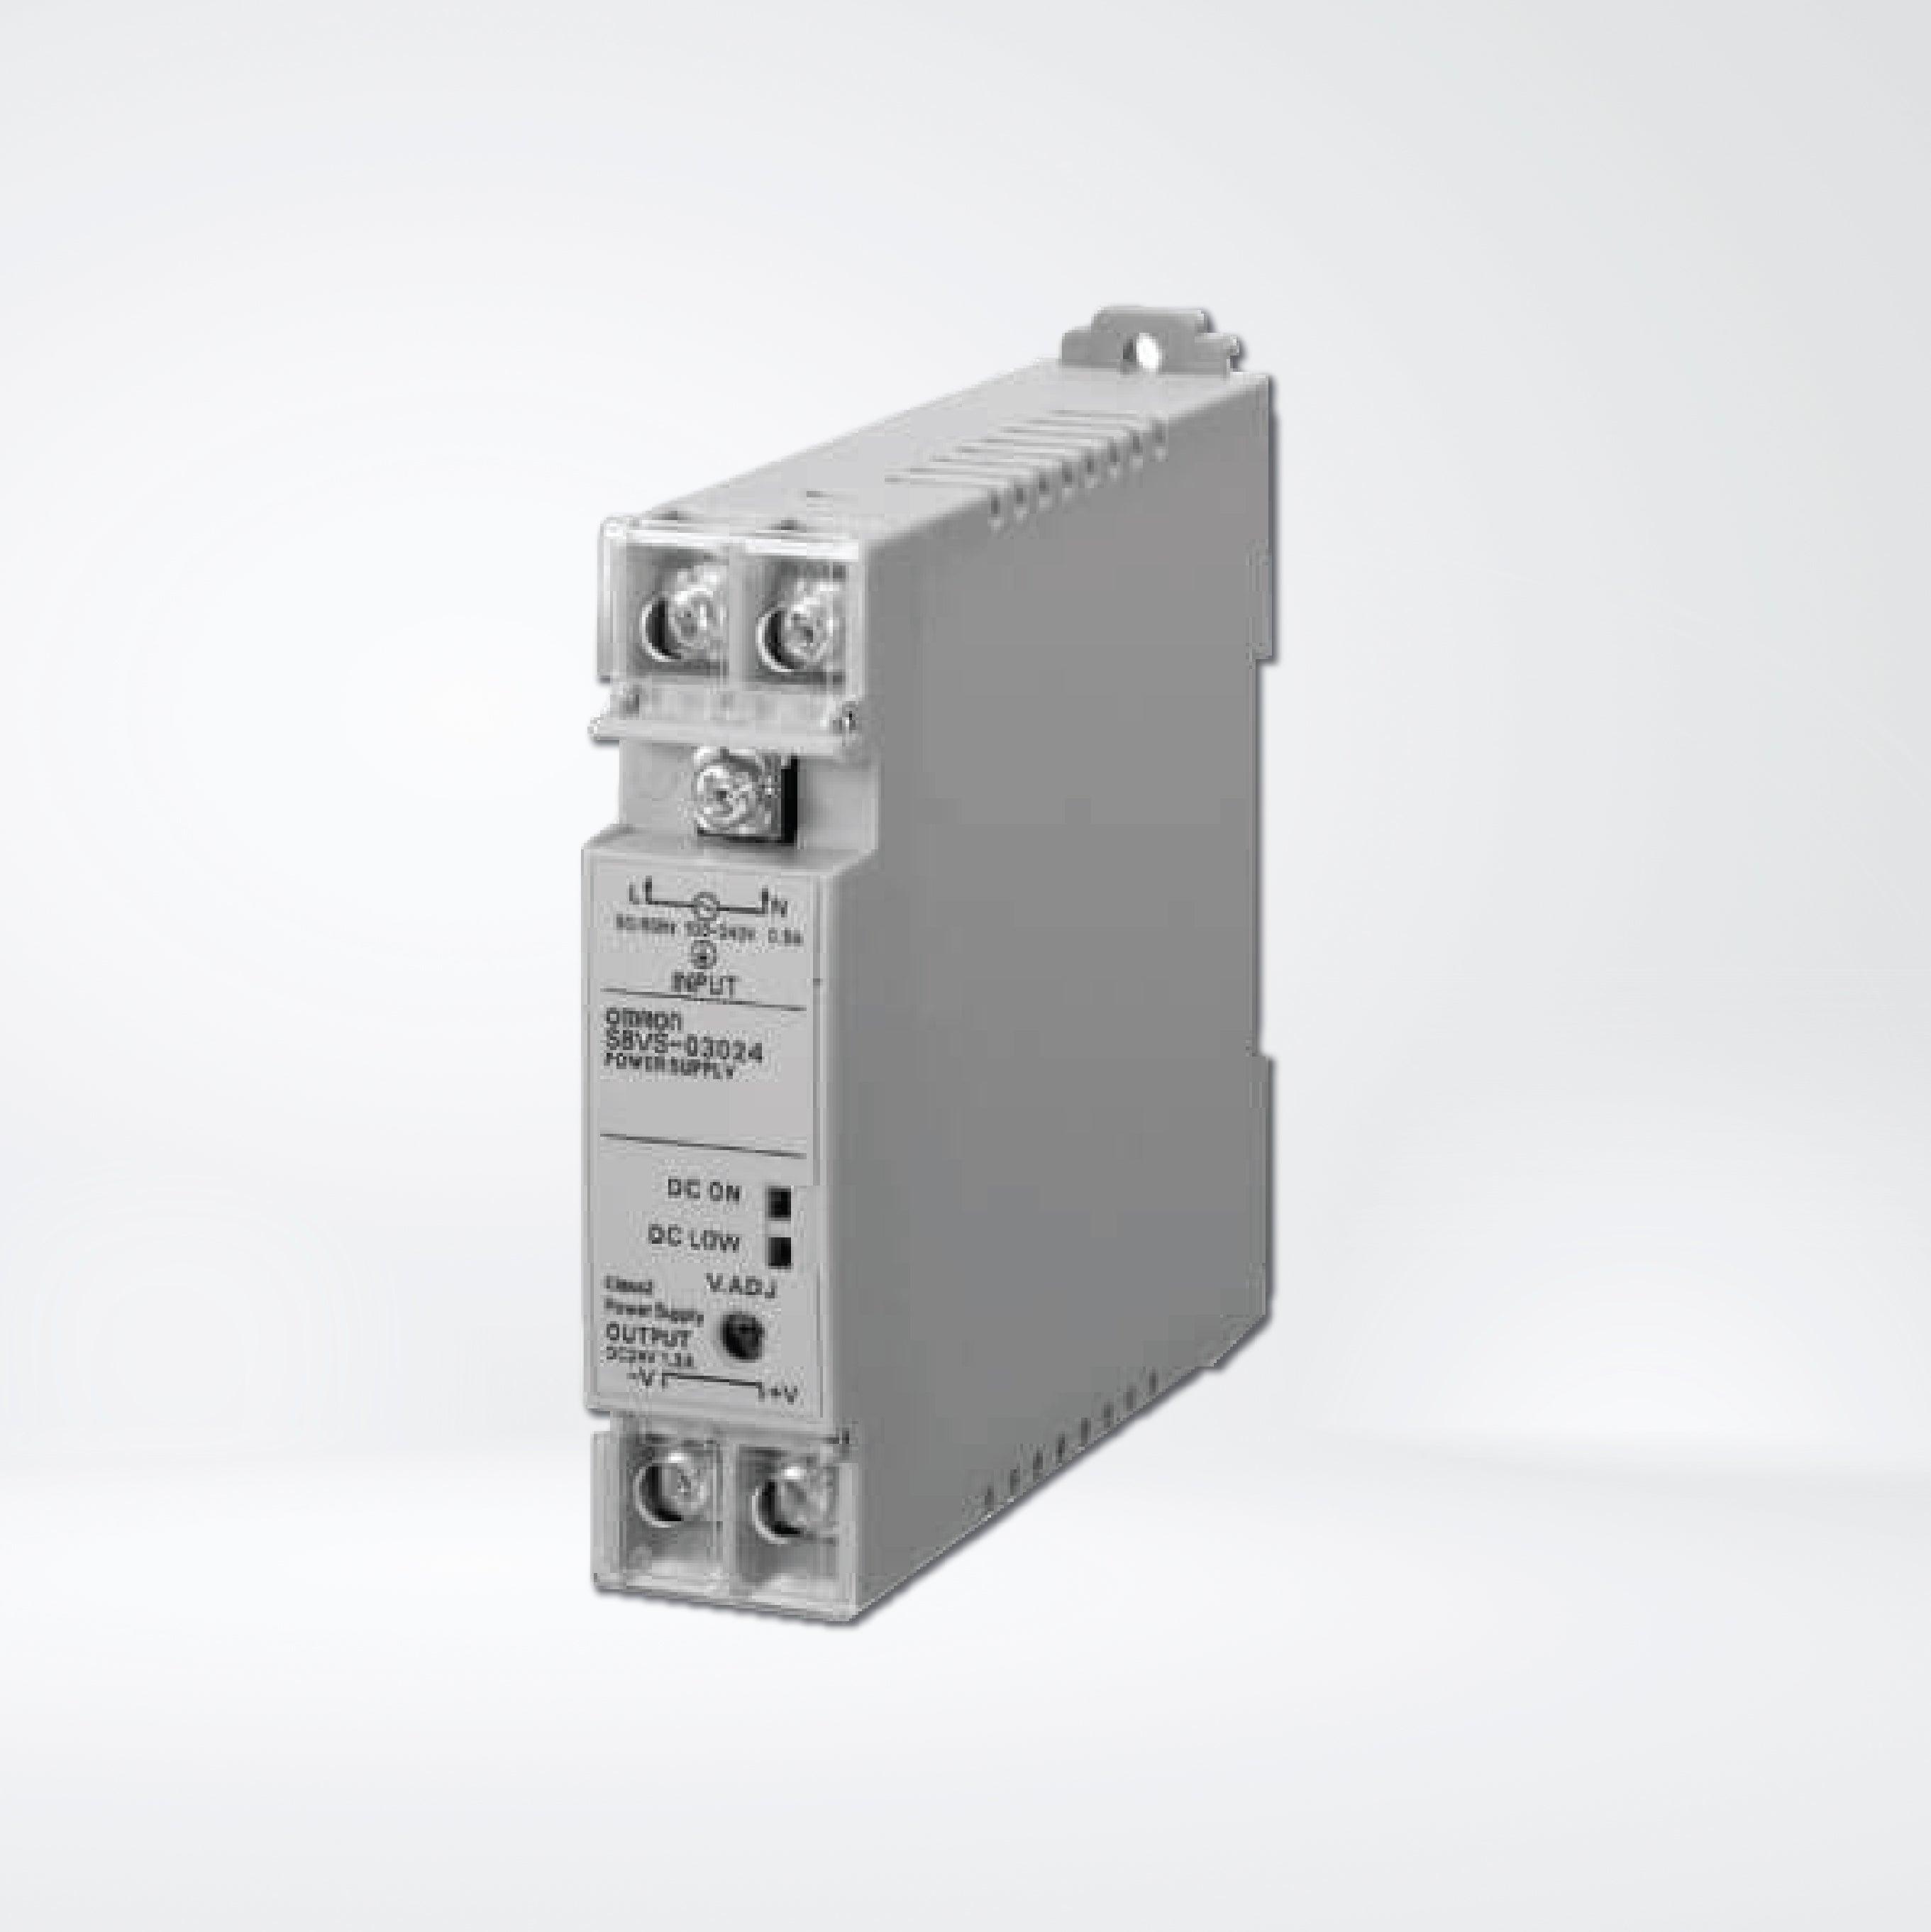 S8VS-03005 Power supply with Screw Terminal Blocks, plastic case, 20 W, 5 VDC - Riverplus